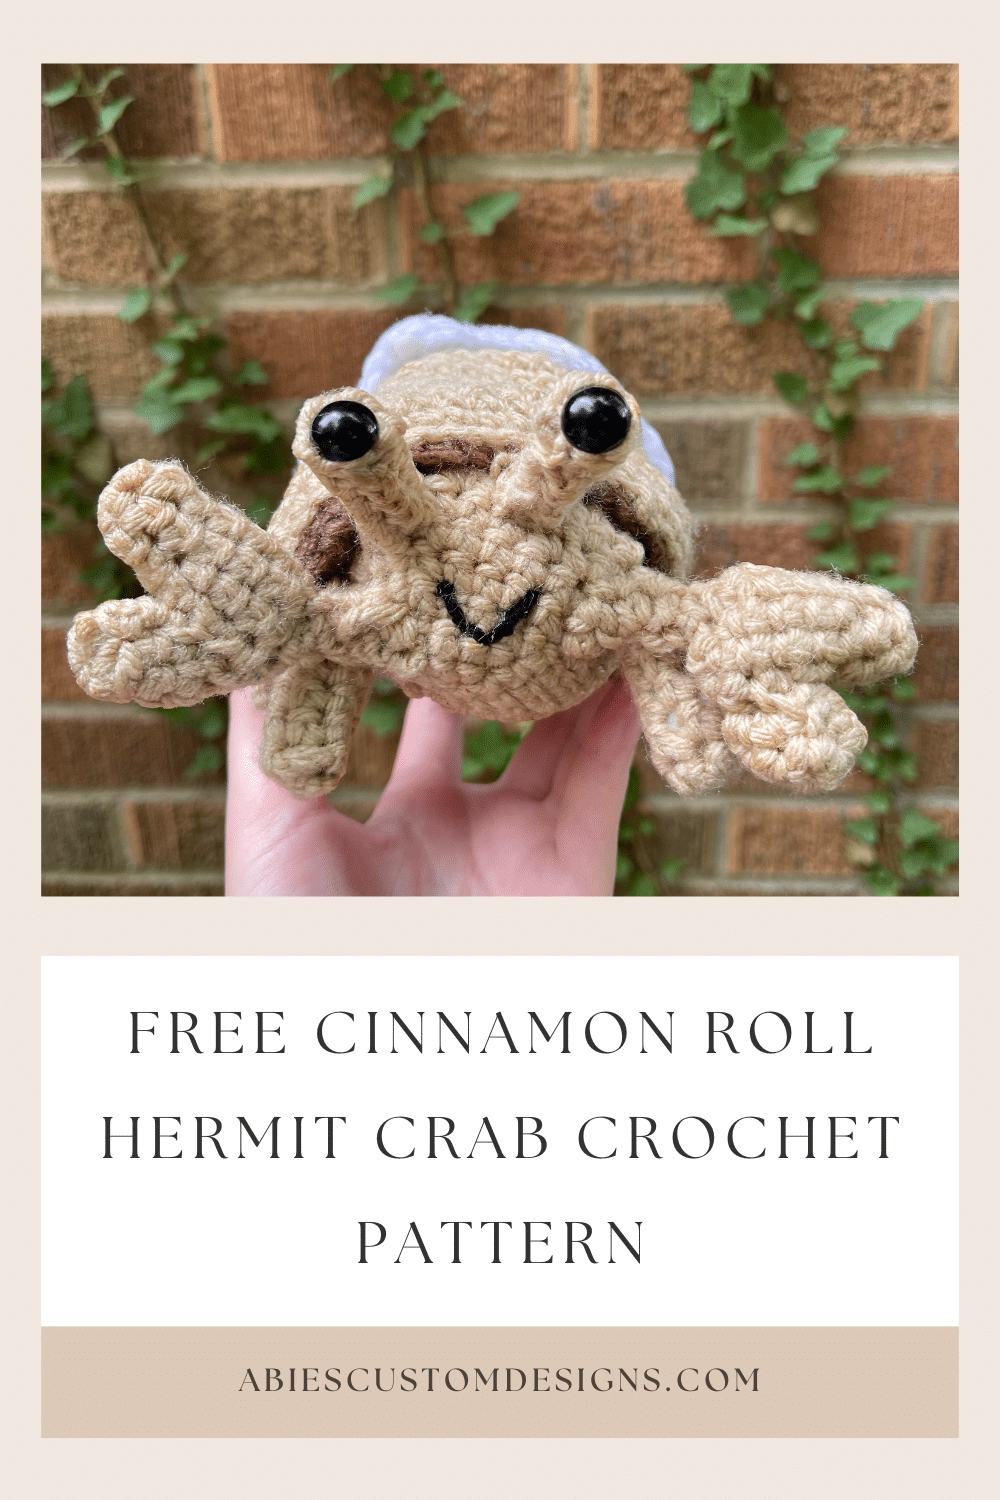 Free cinnamon roll hermit crab crochet pattern